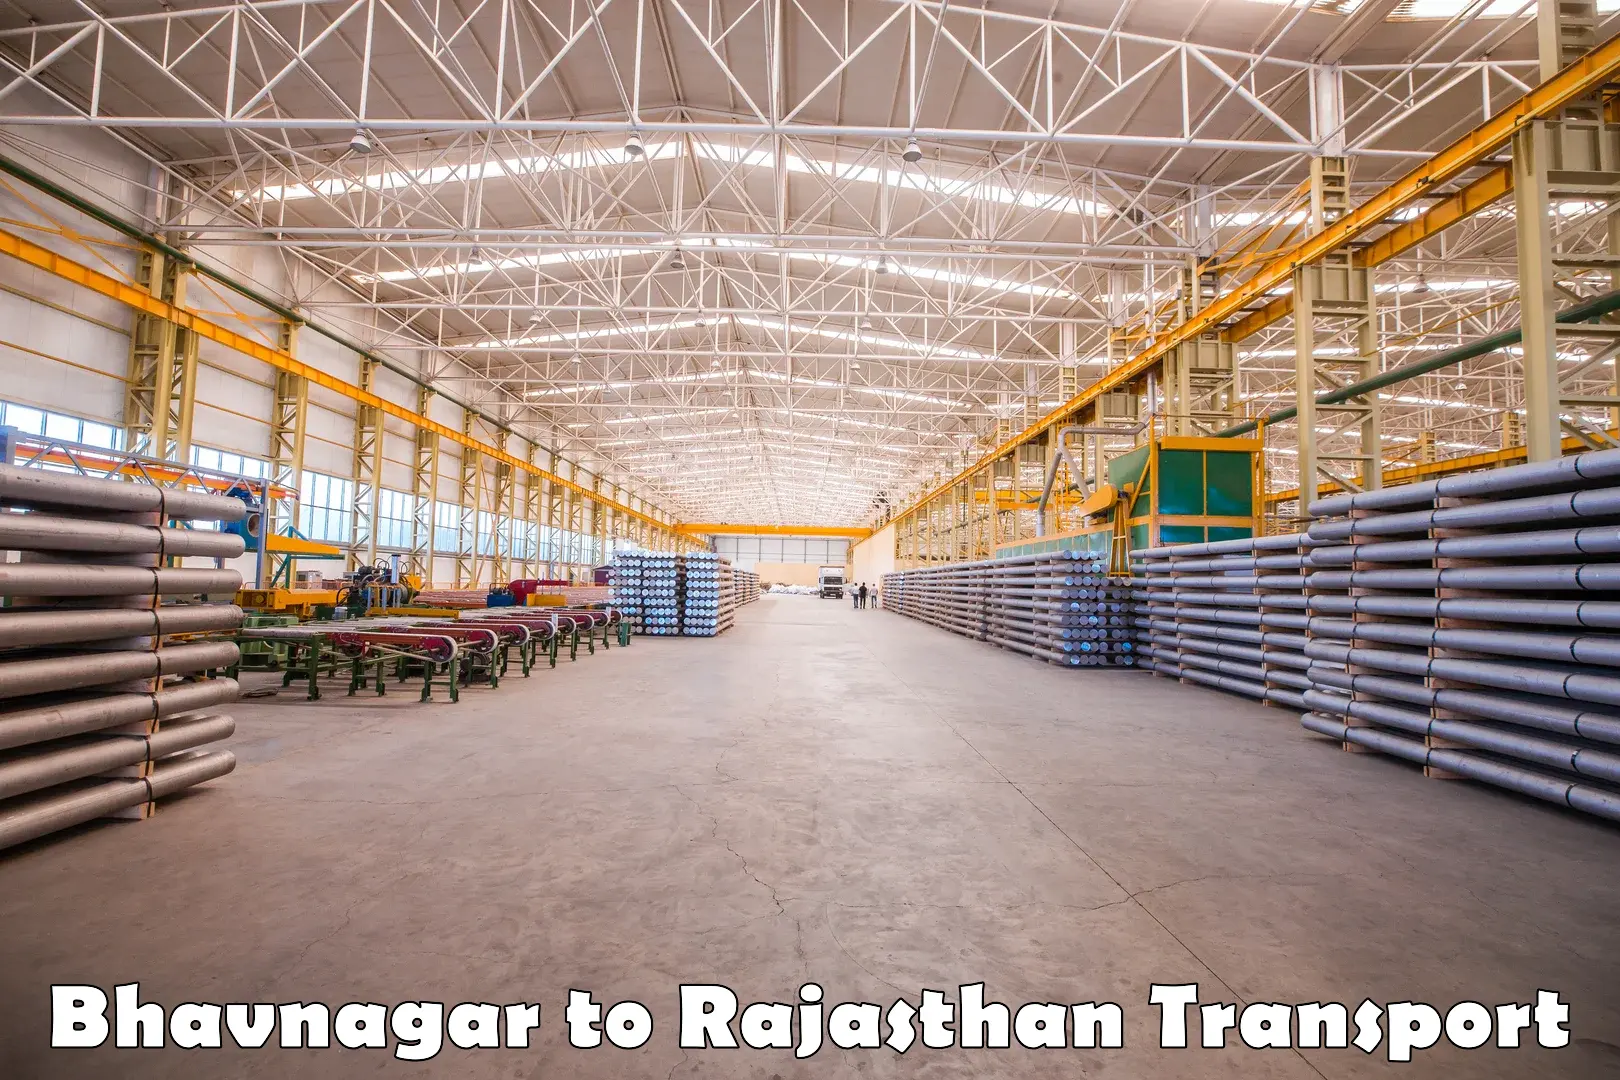 Truck transport companies in India Bhavnagar to Barmer